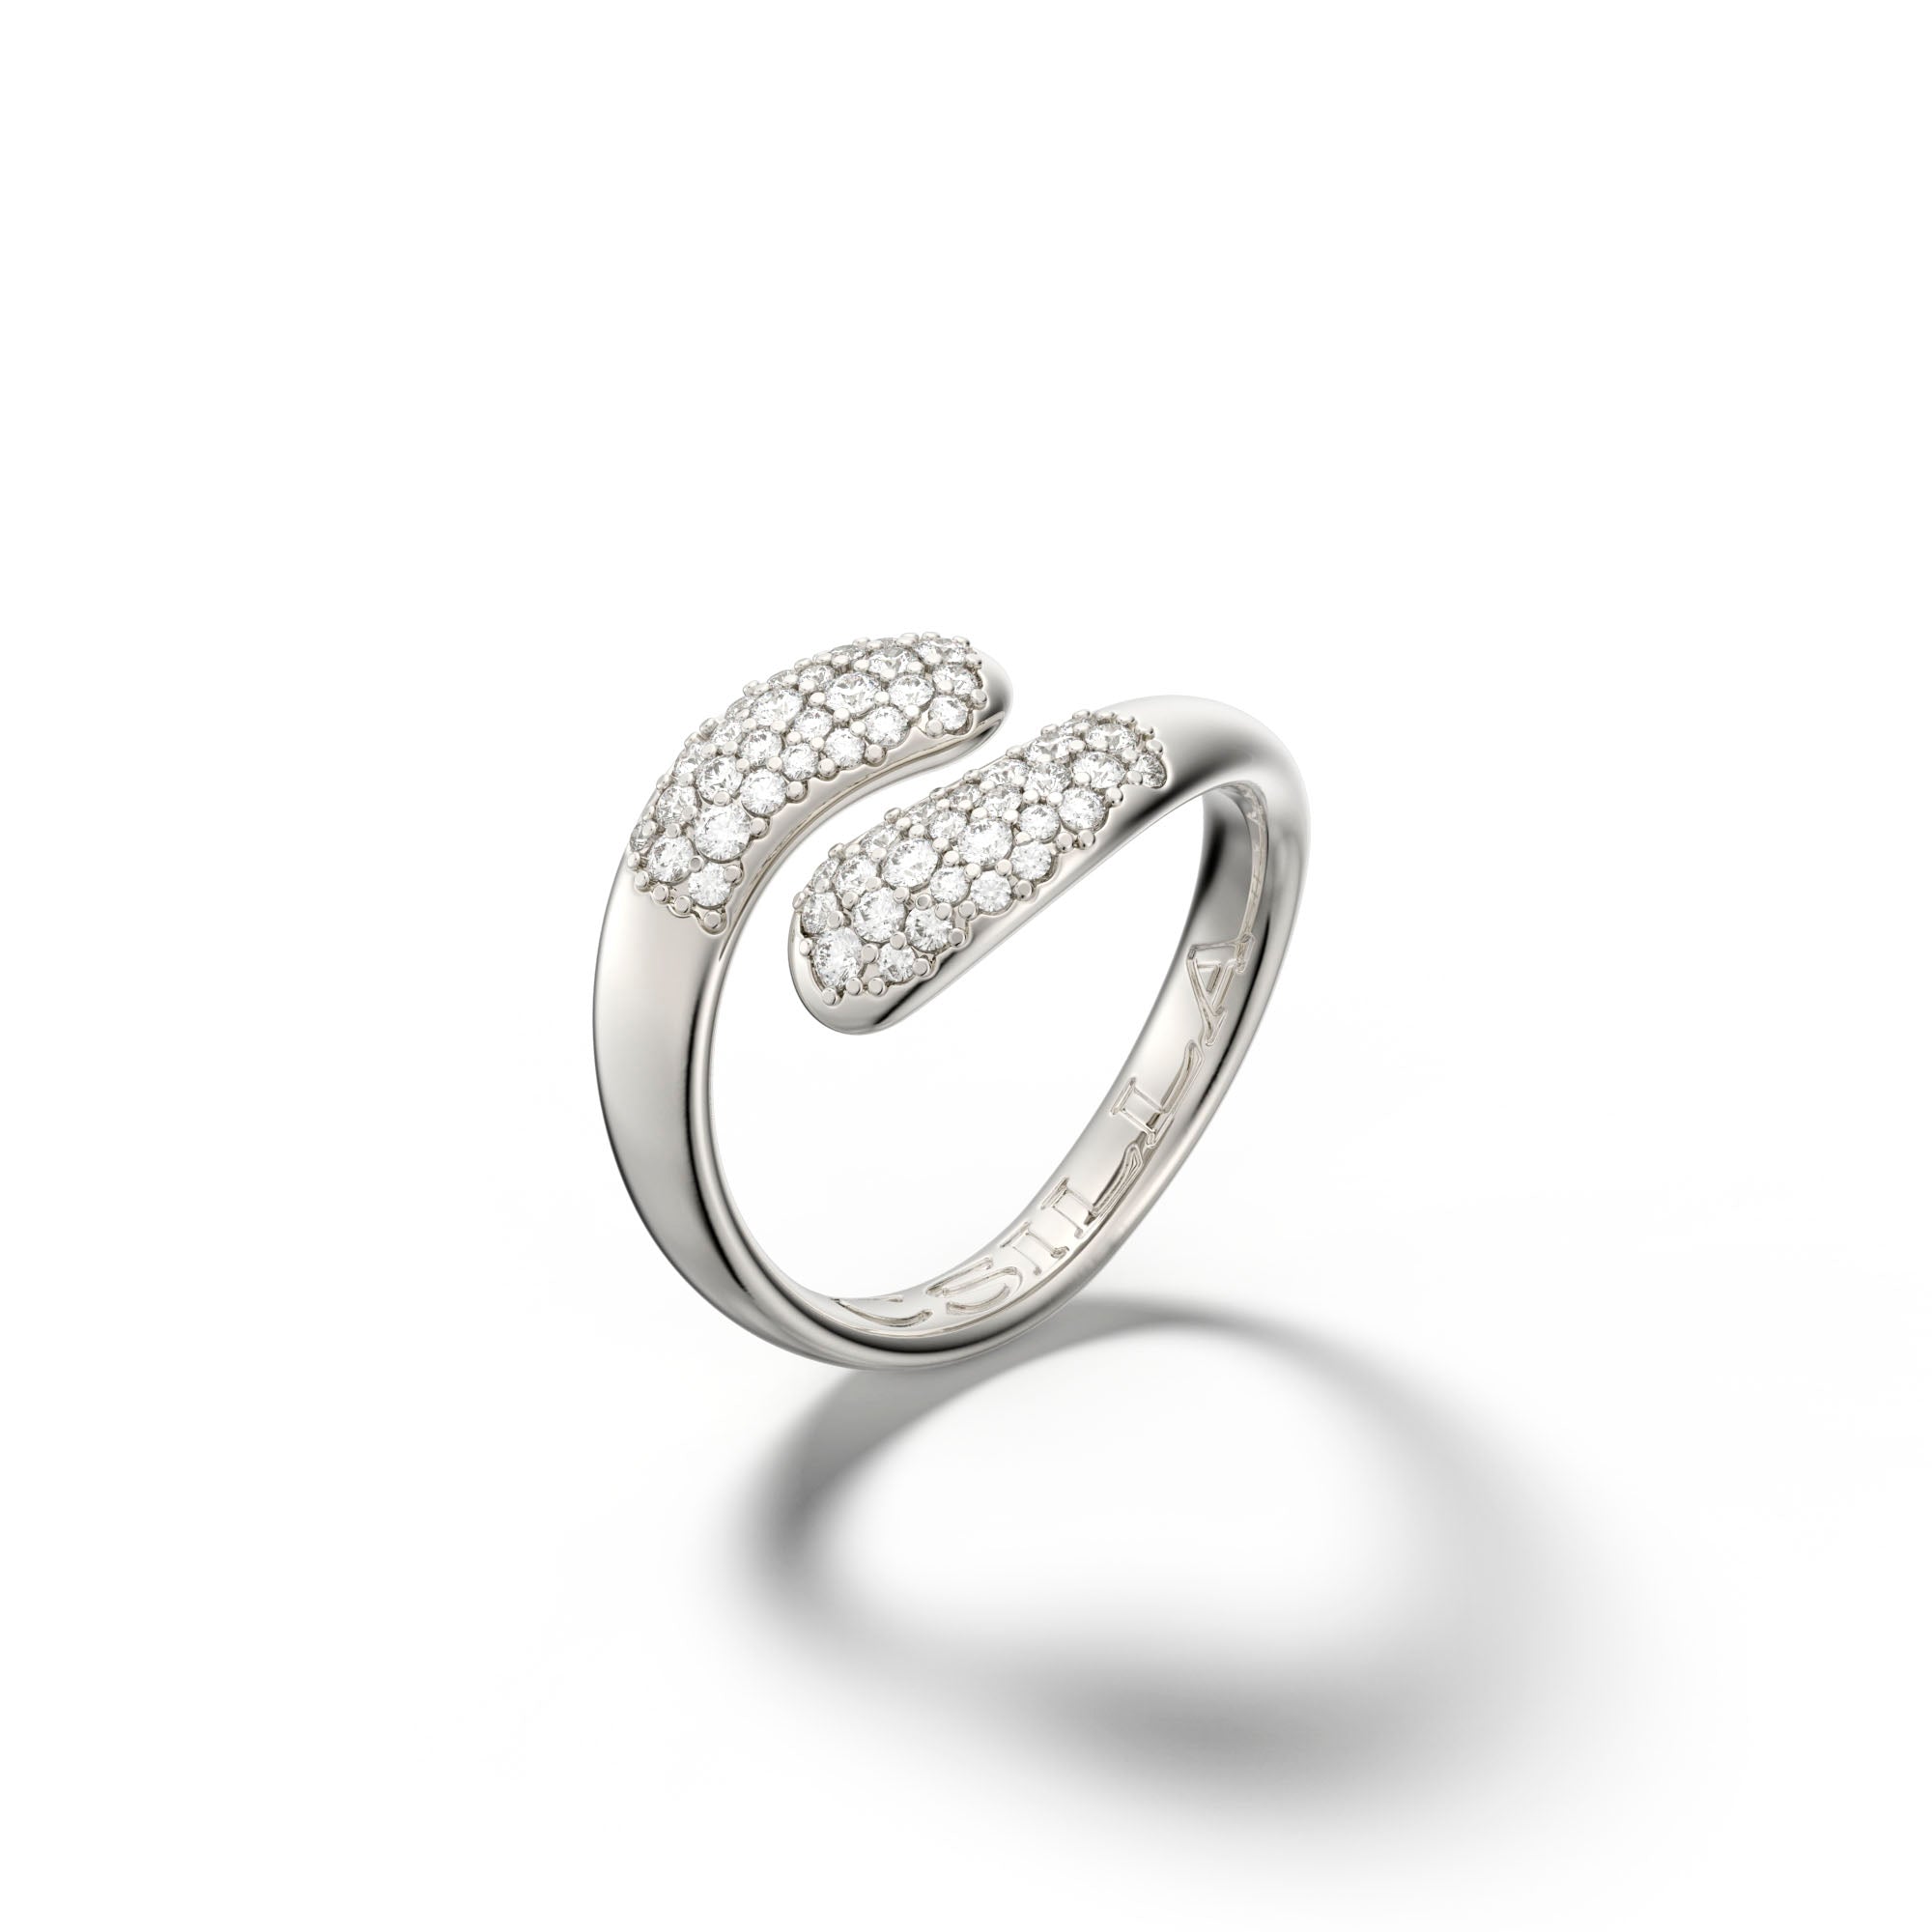 Casino Royale Twist - White Gold Diamond Ring - Csilla Jewelry